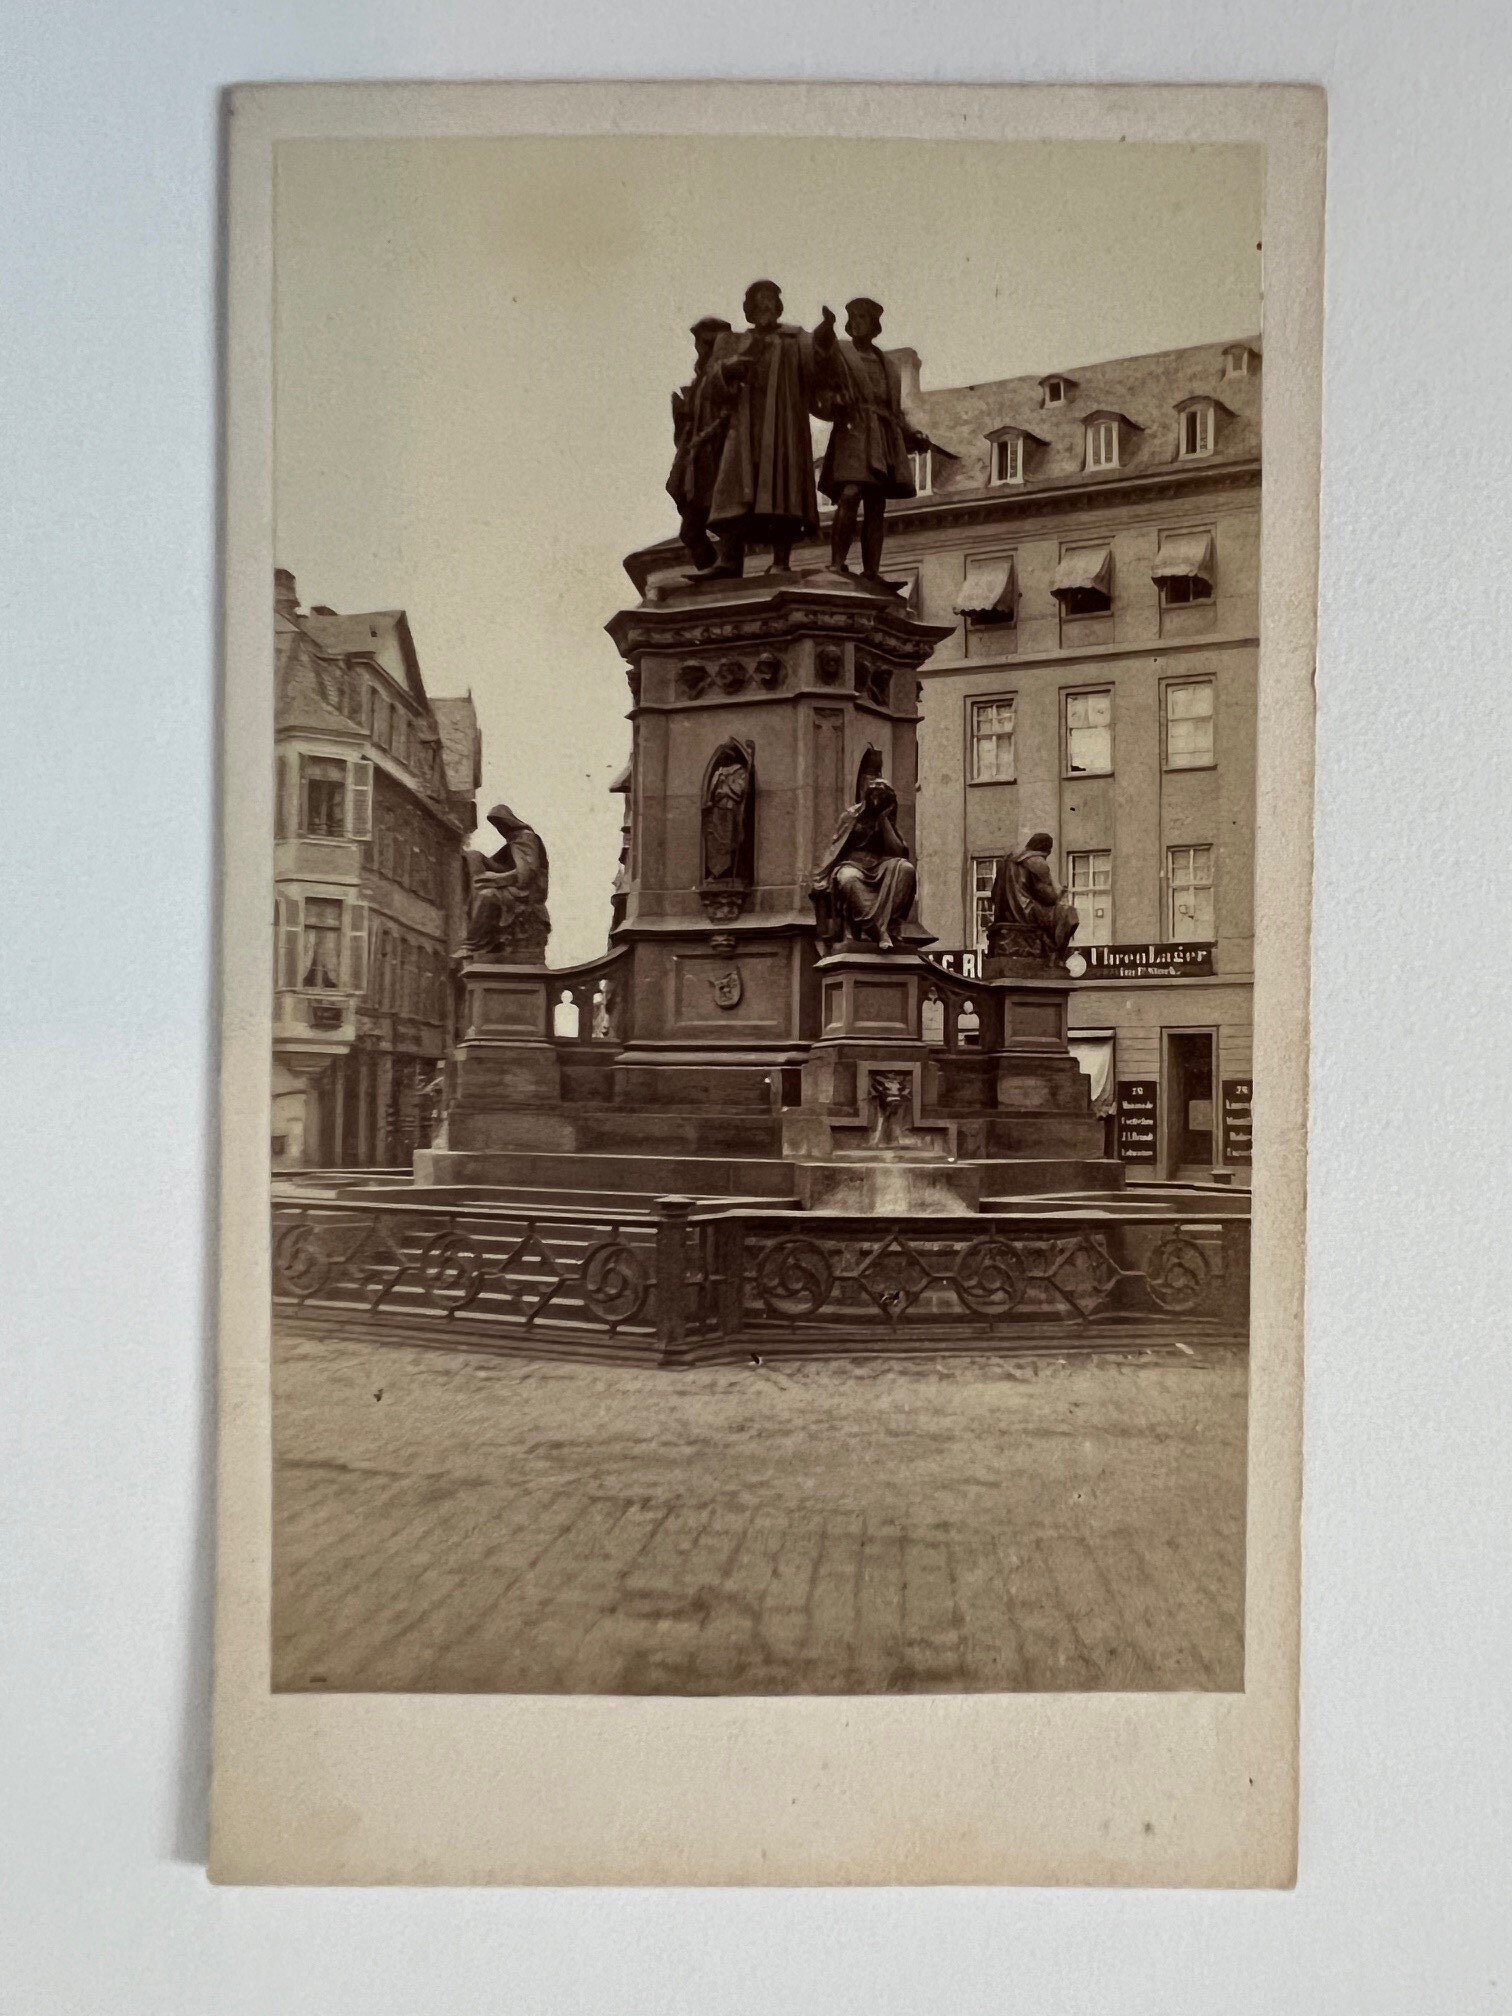 CdV, Hippolyte Jouvin, Francfort, Guttenberg, ca. 1866 (Taunus-Rhein-Main - Regionalgeschichtliche Sammlung Dr. Stefan Naas CC BY-NC-SA)